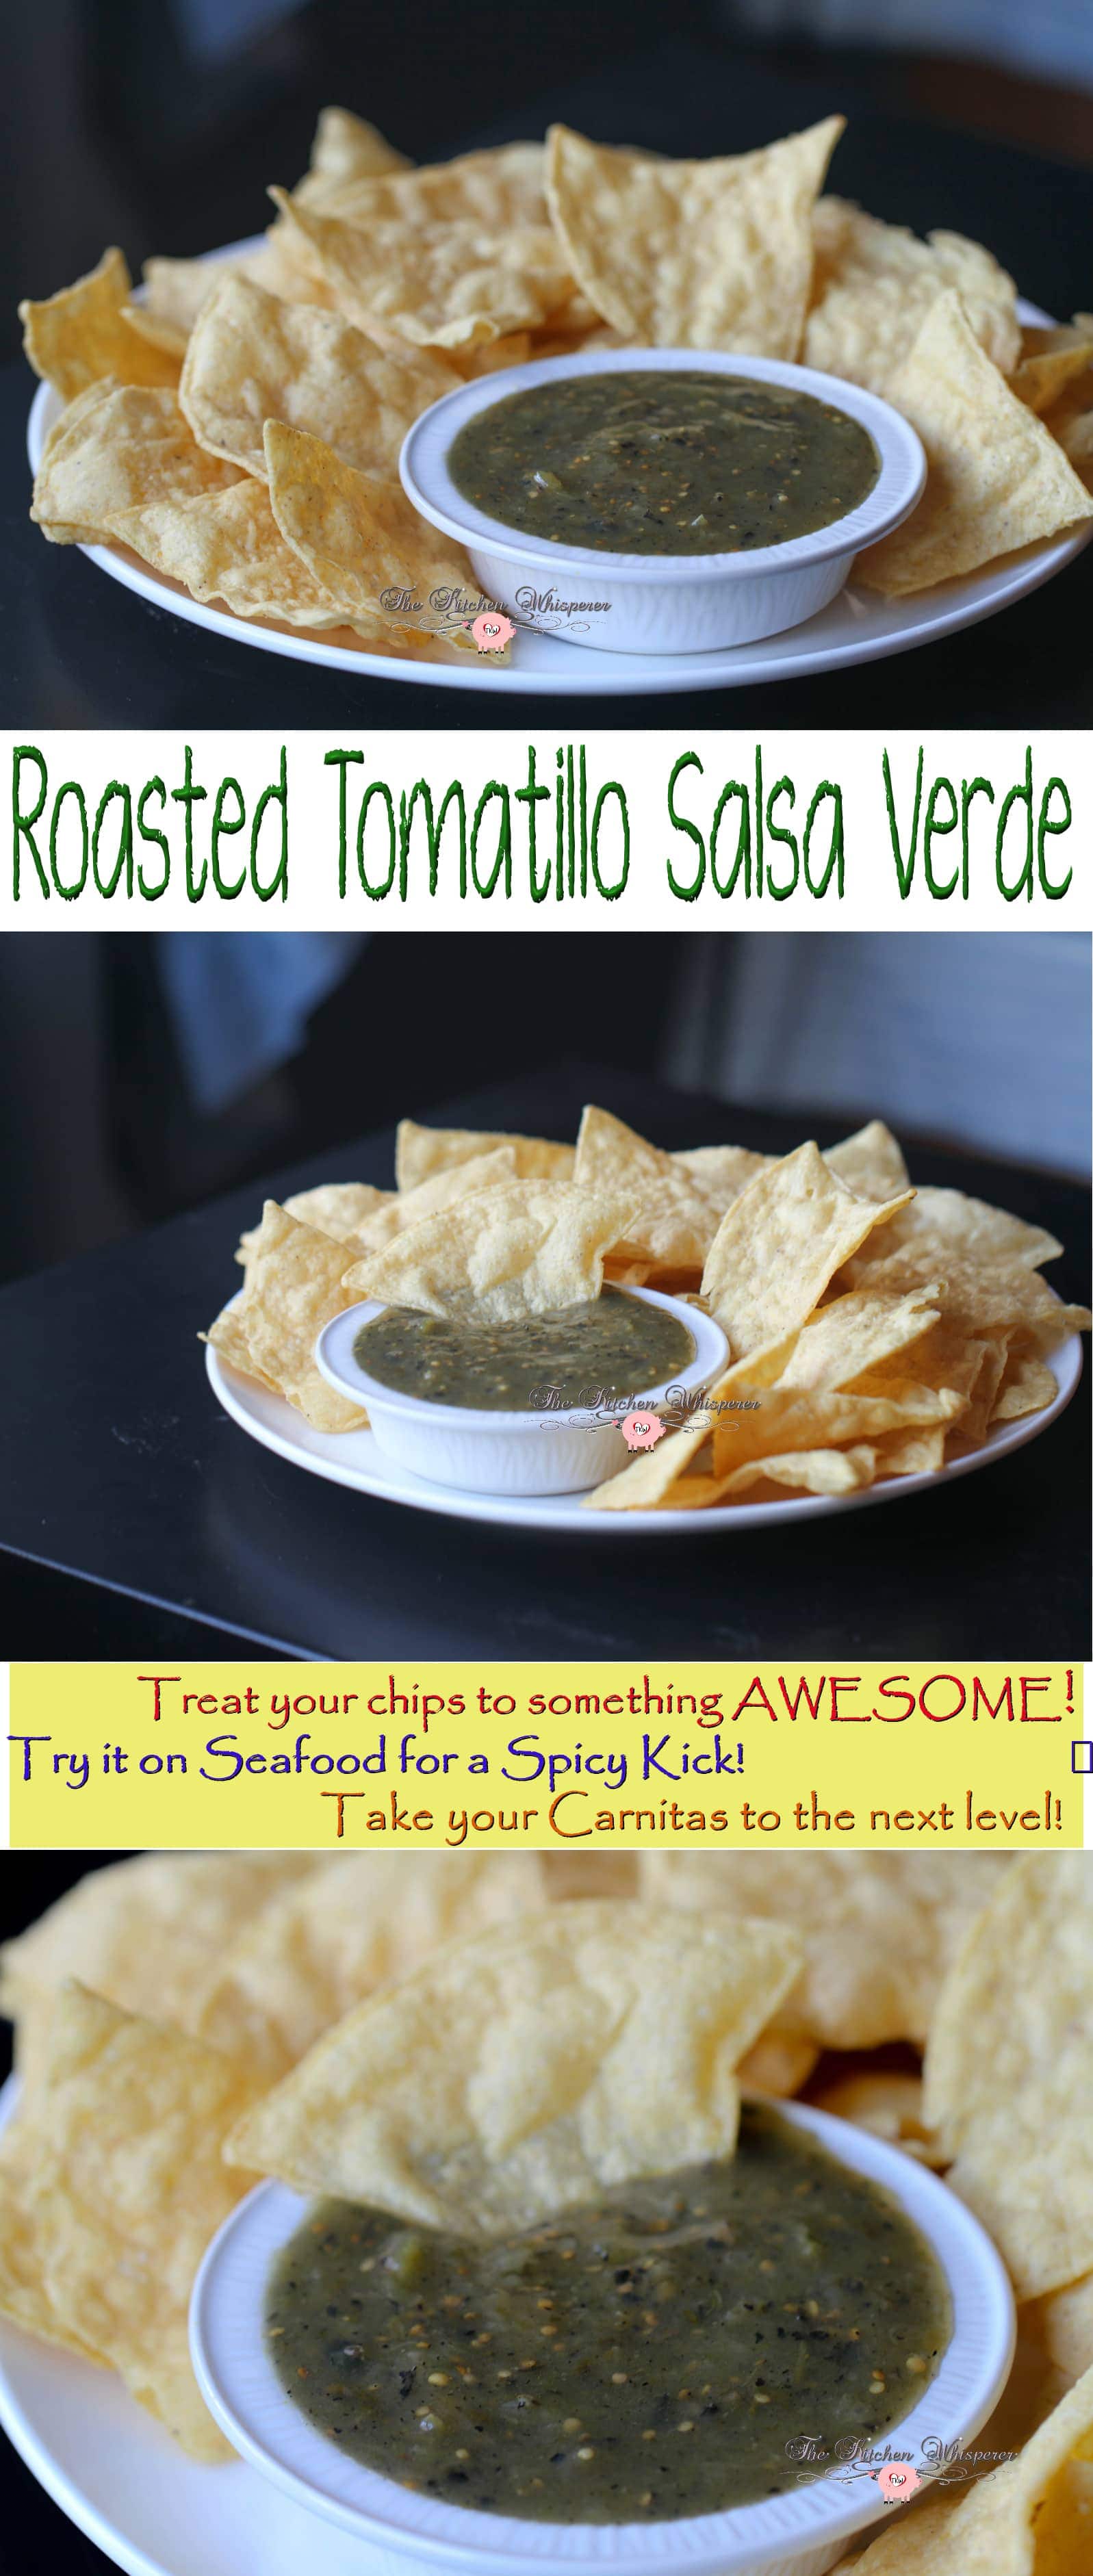 Roasted Tomatillo Salsa Verde Collage1